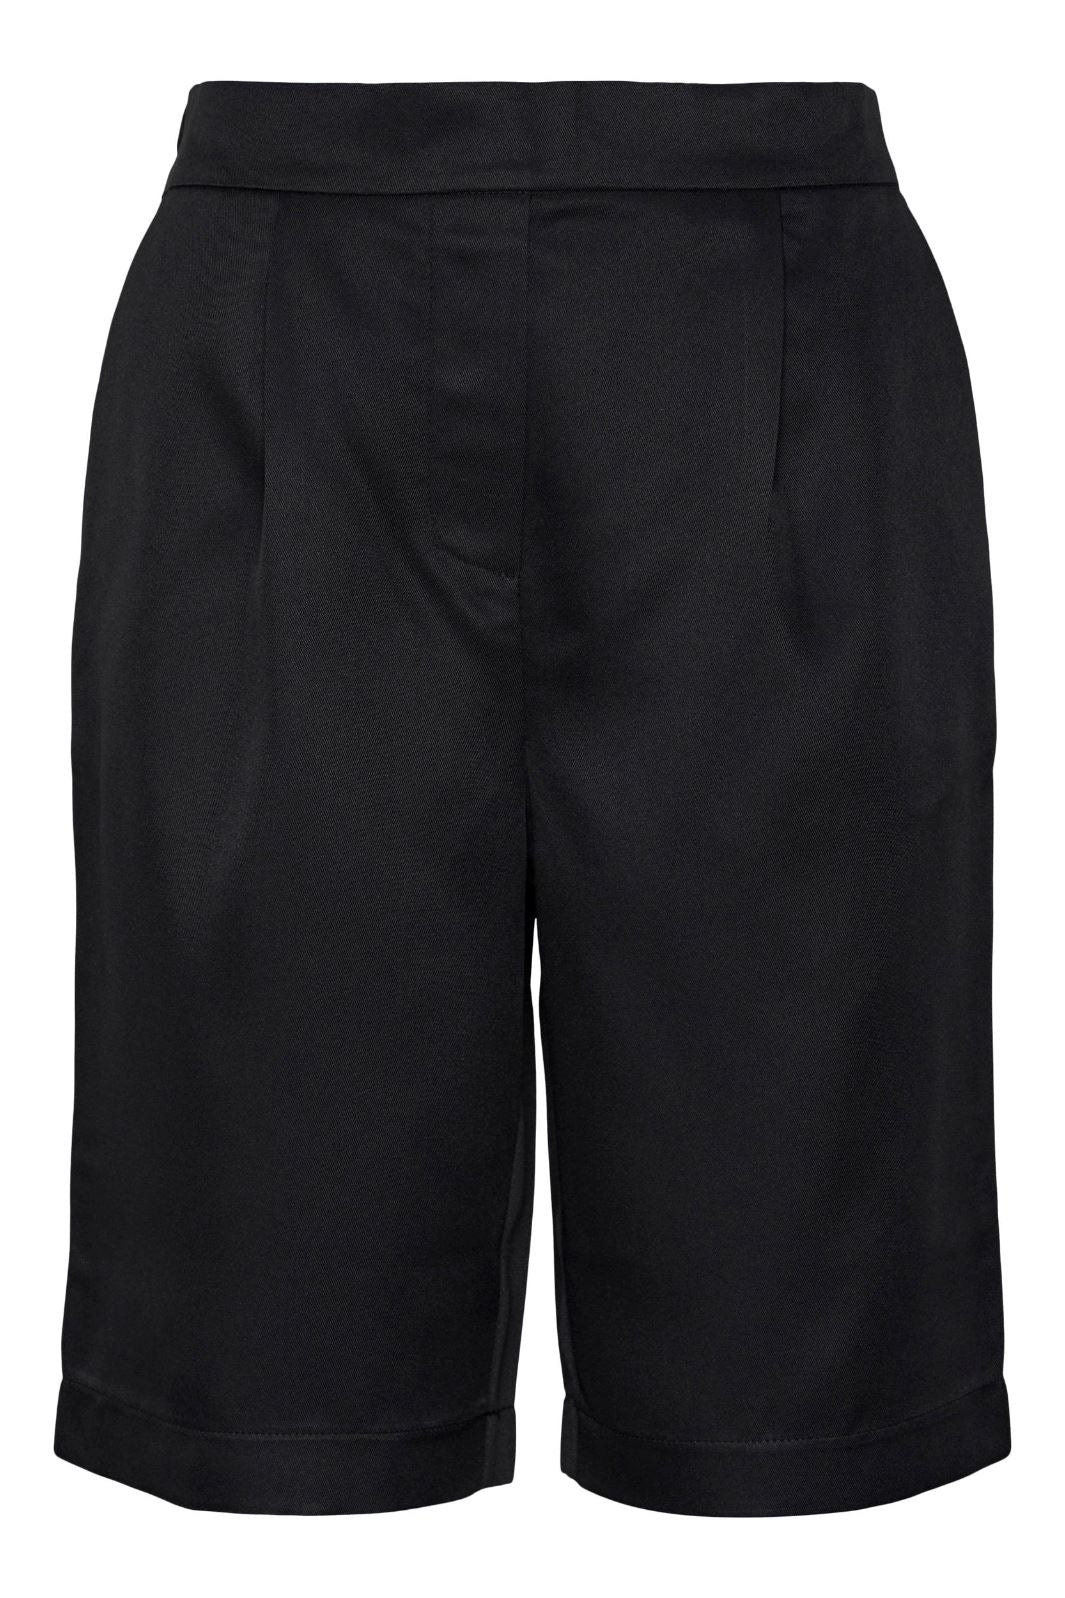 Pieces - Pctally Hw Shorts - Black Shorts 